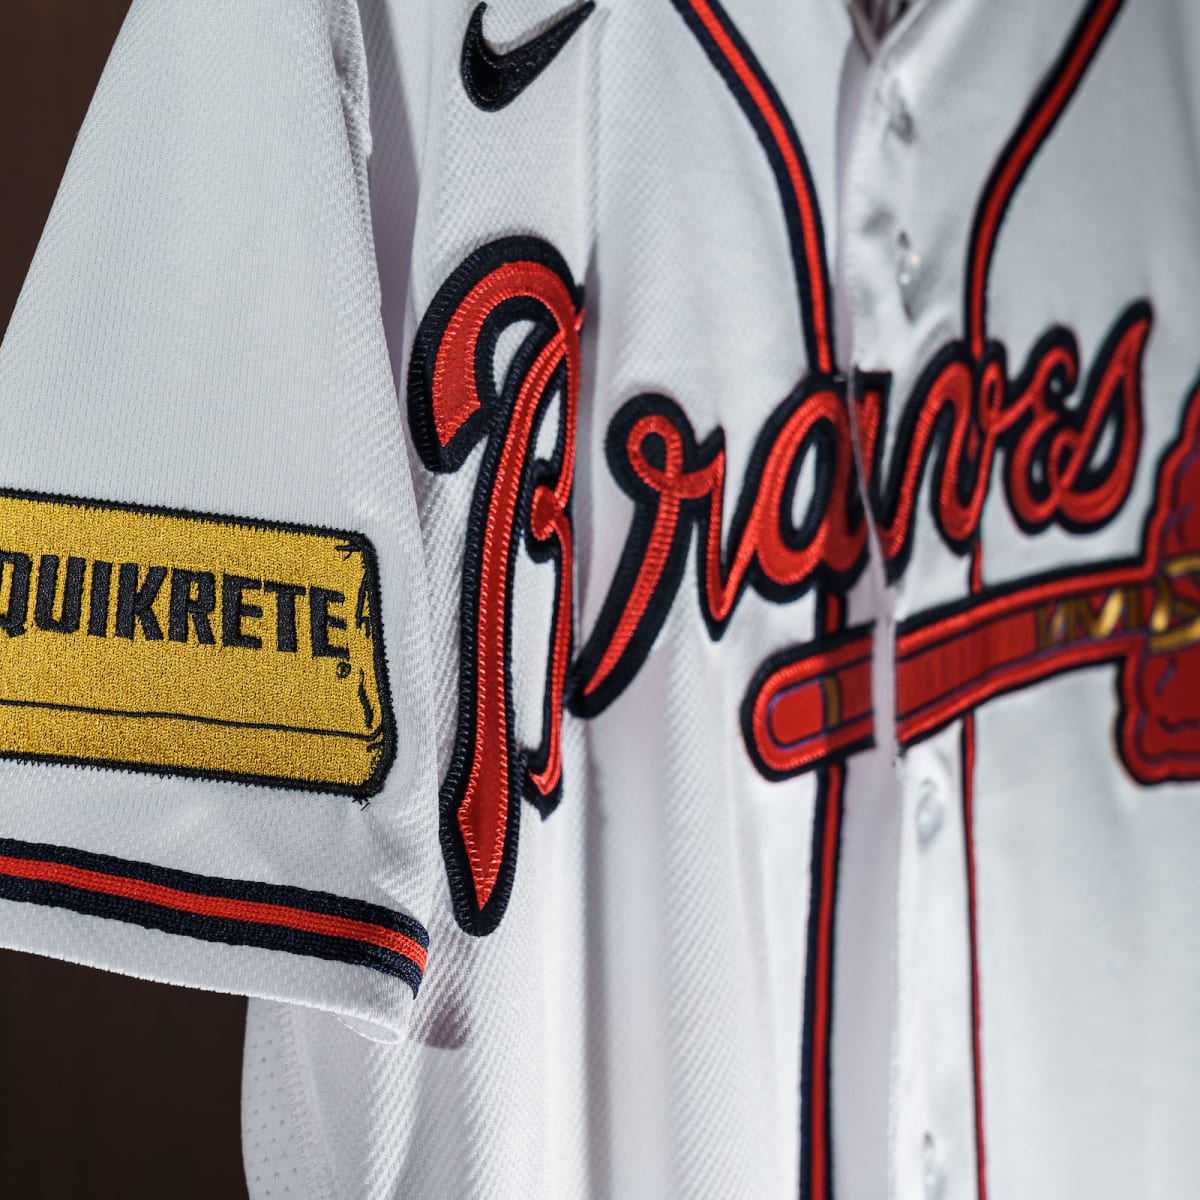 MLB uniforms will have advertising beginning in the 2023 season